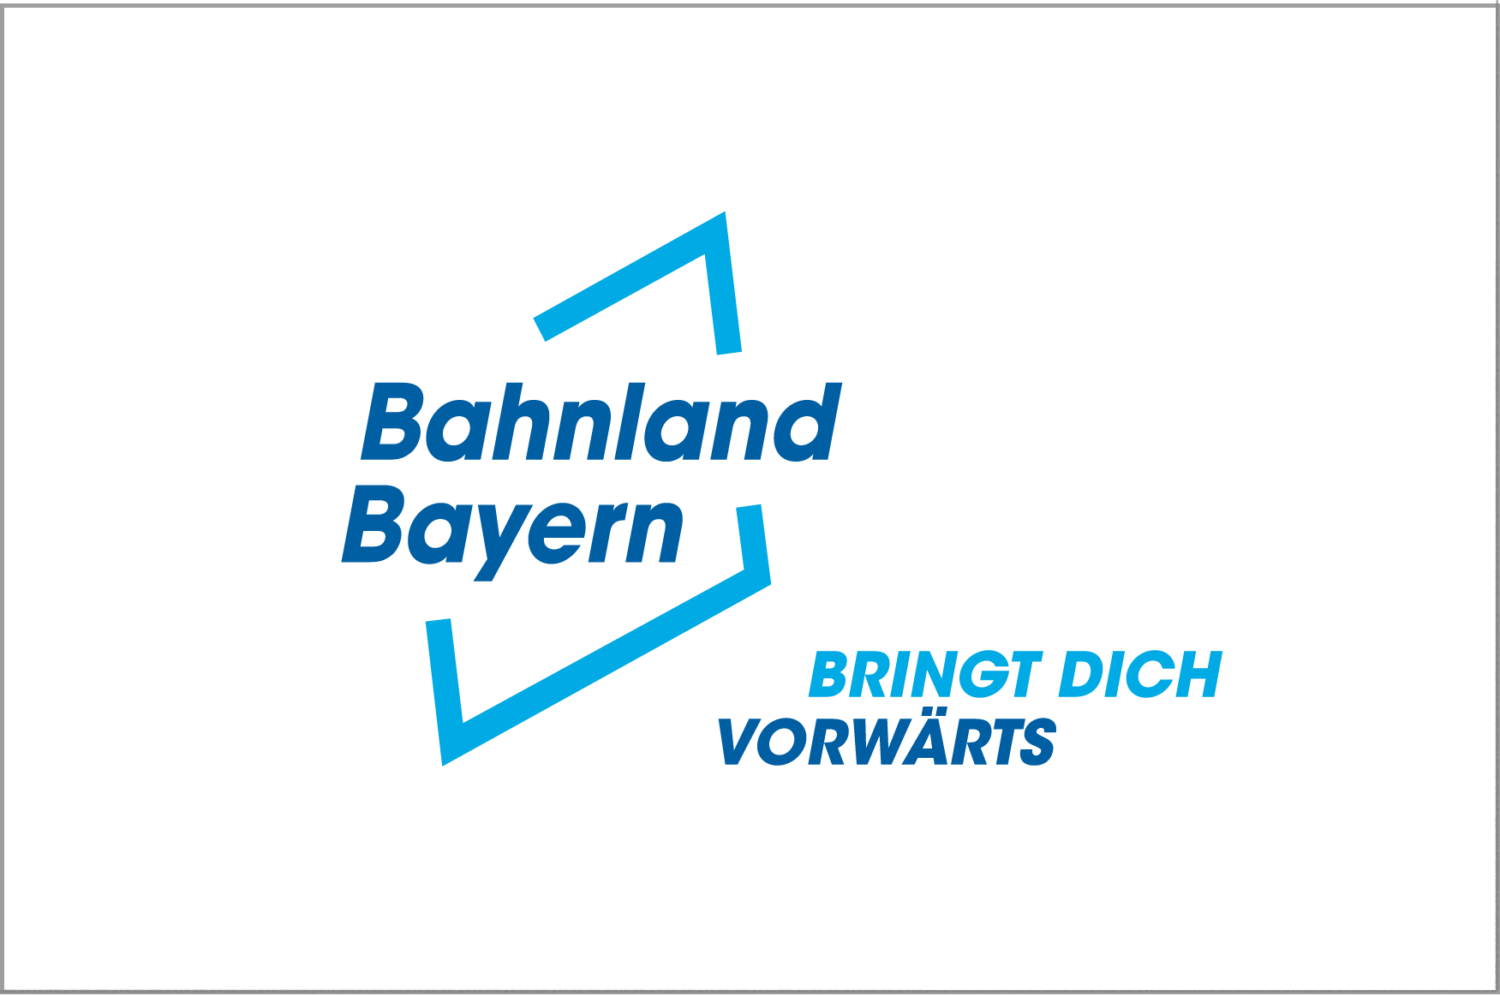 Boschetsrieder Str. 69
81379 München
Tel. +49 89 748825-51
info@bahnland-bayern.de
